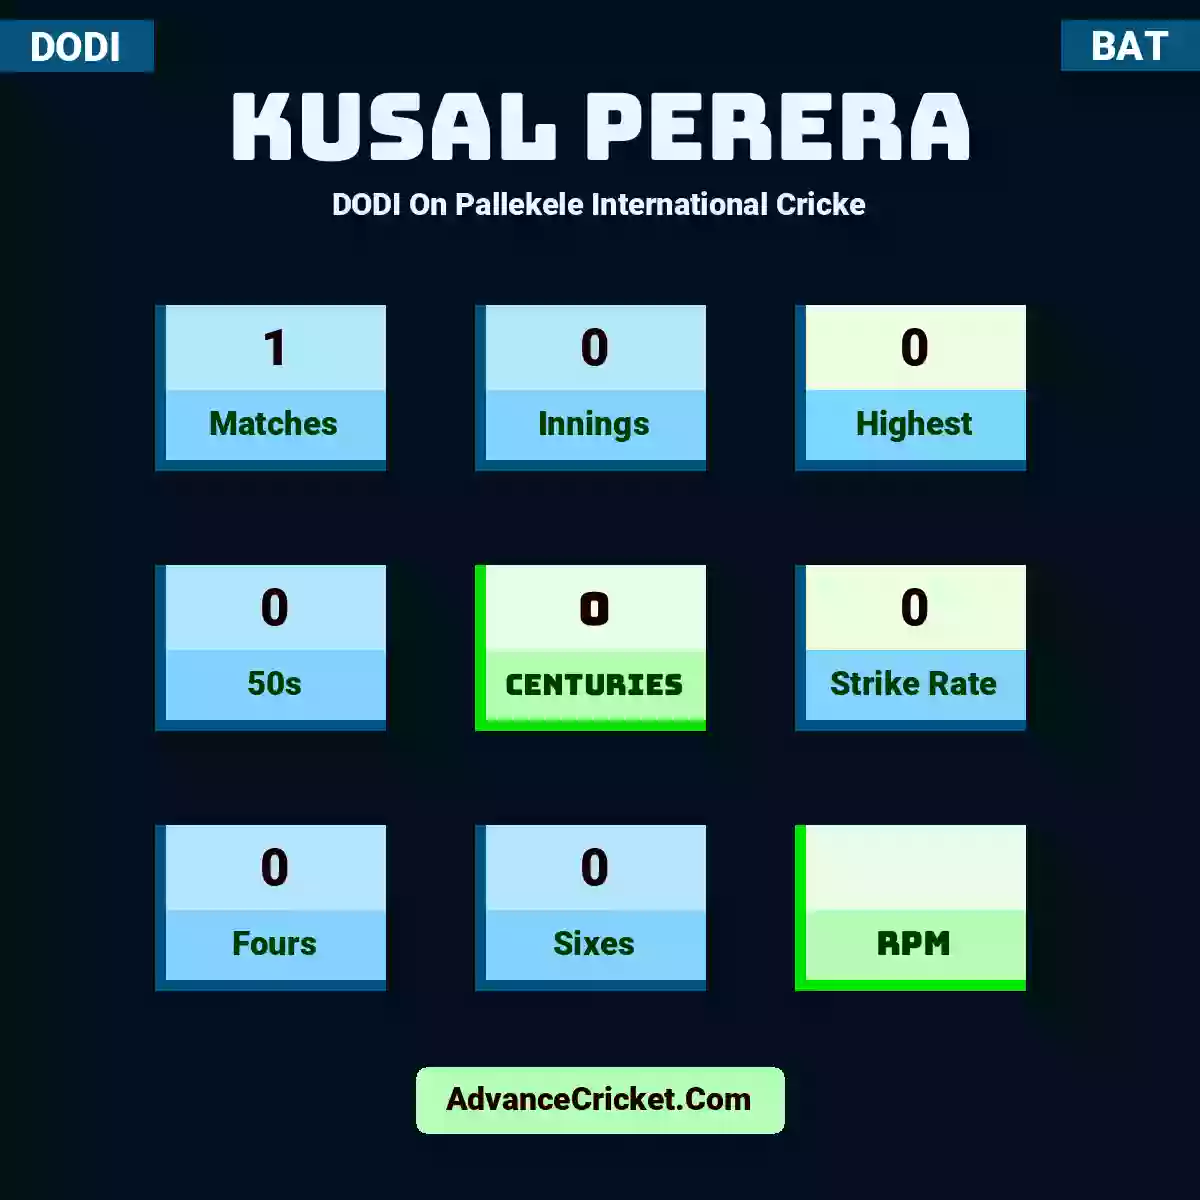 Kusal Perera DODI  On Pallekele International Cricke, Kusal Perera played 1 matches, scored 0 runs as highest, 0 half-centuries, and 0 centuries, with a strike rate of 0. K.Perera hit 0 fours and 0 sixes.